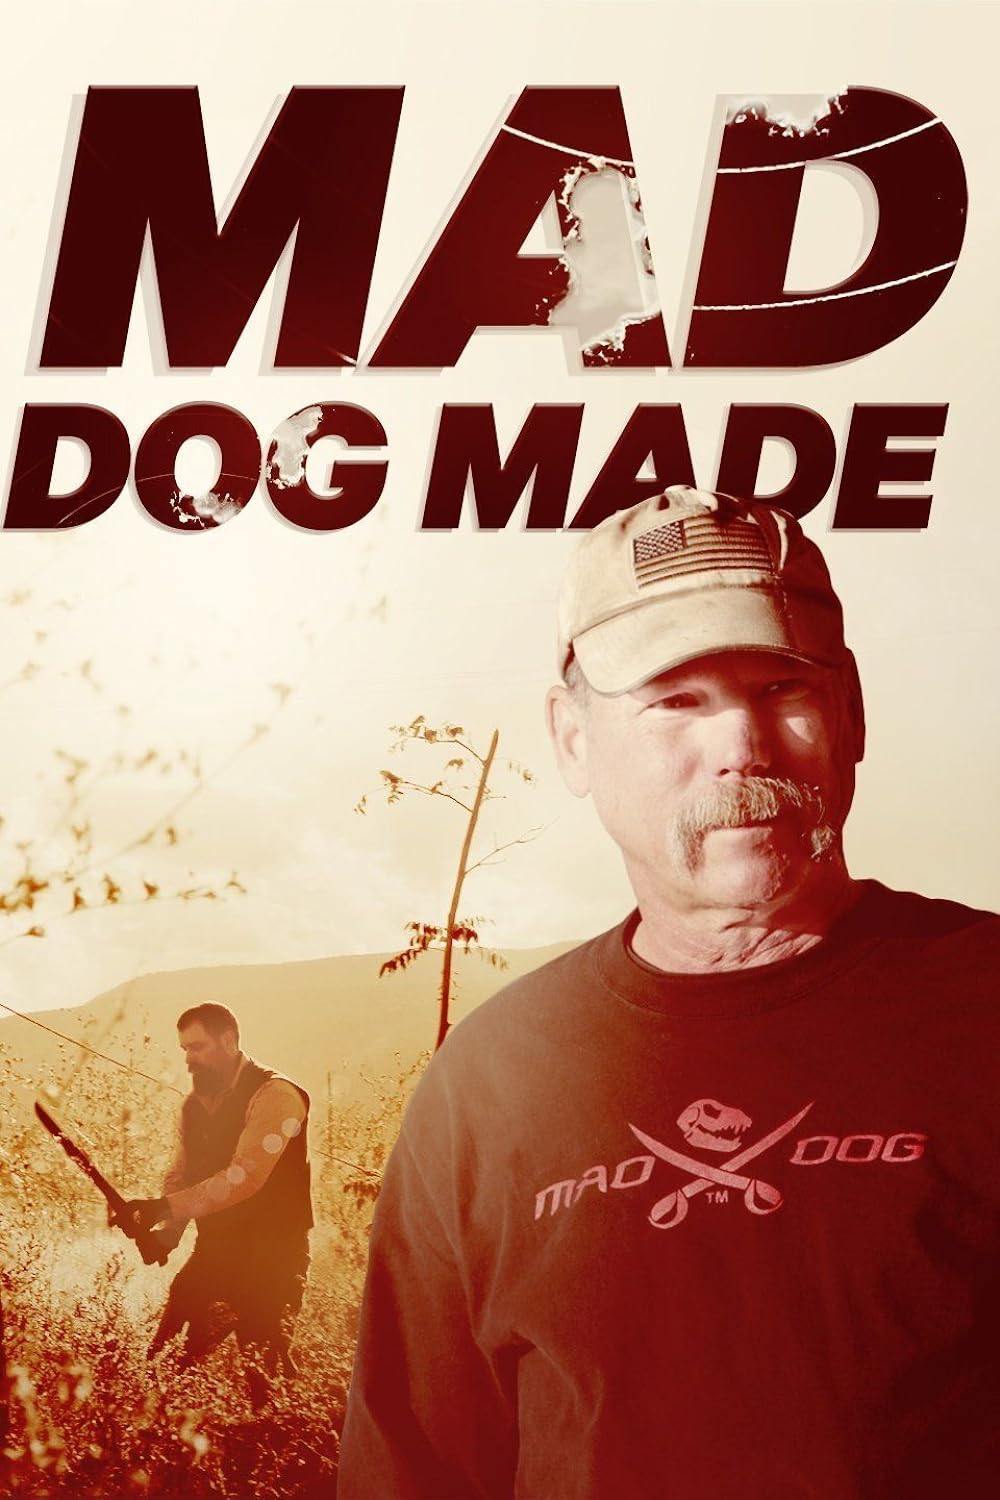 Mad Dog Made